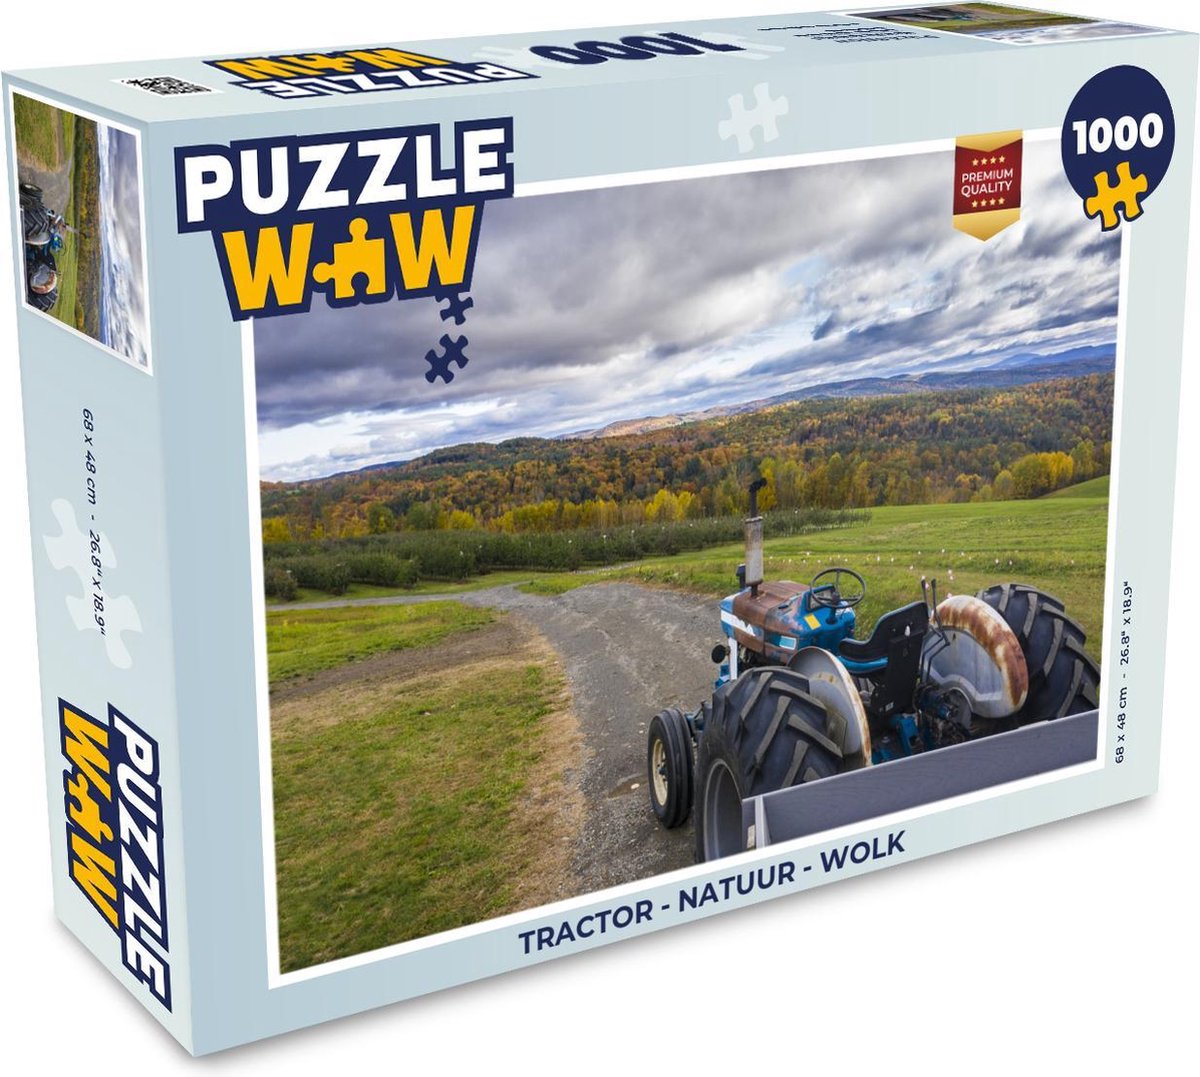 Afbeelding van product PuzzleWow  Puzzel Tractor - Natuur - Wolk - Legpuzzel - Puzzel 1000 stukjes volwassenen